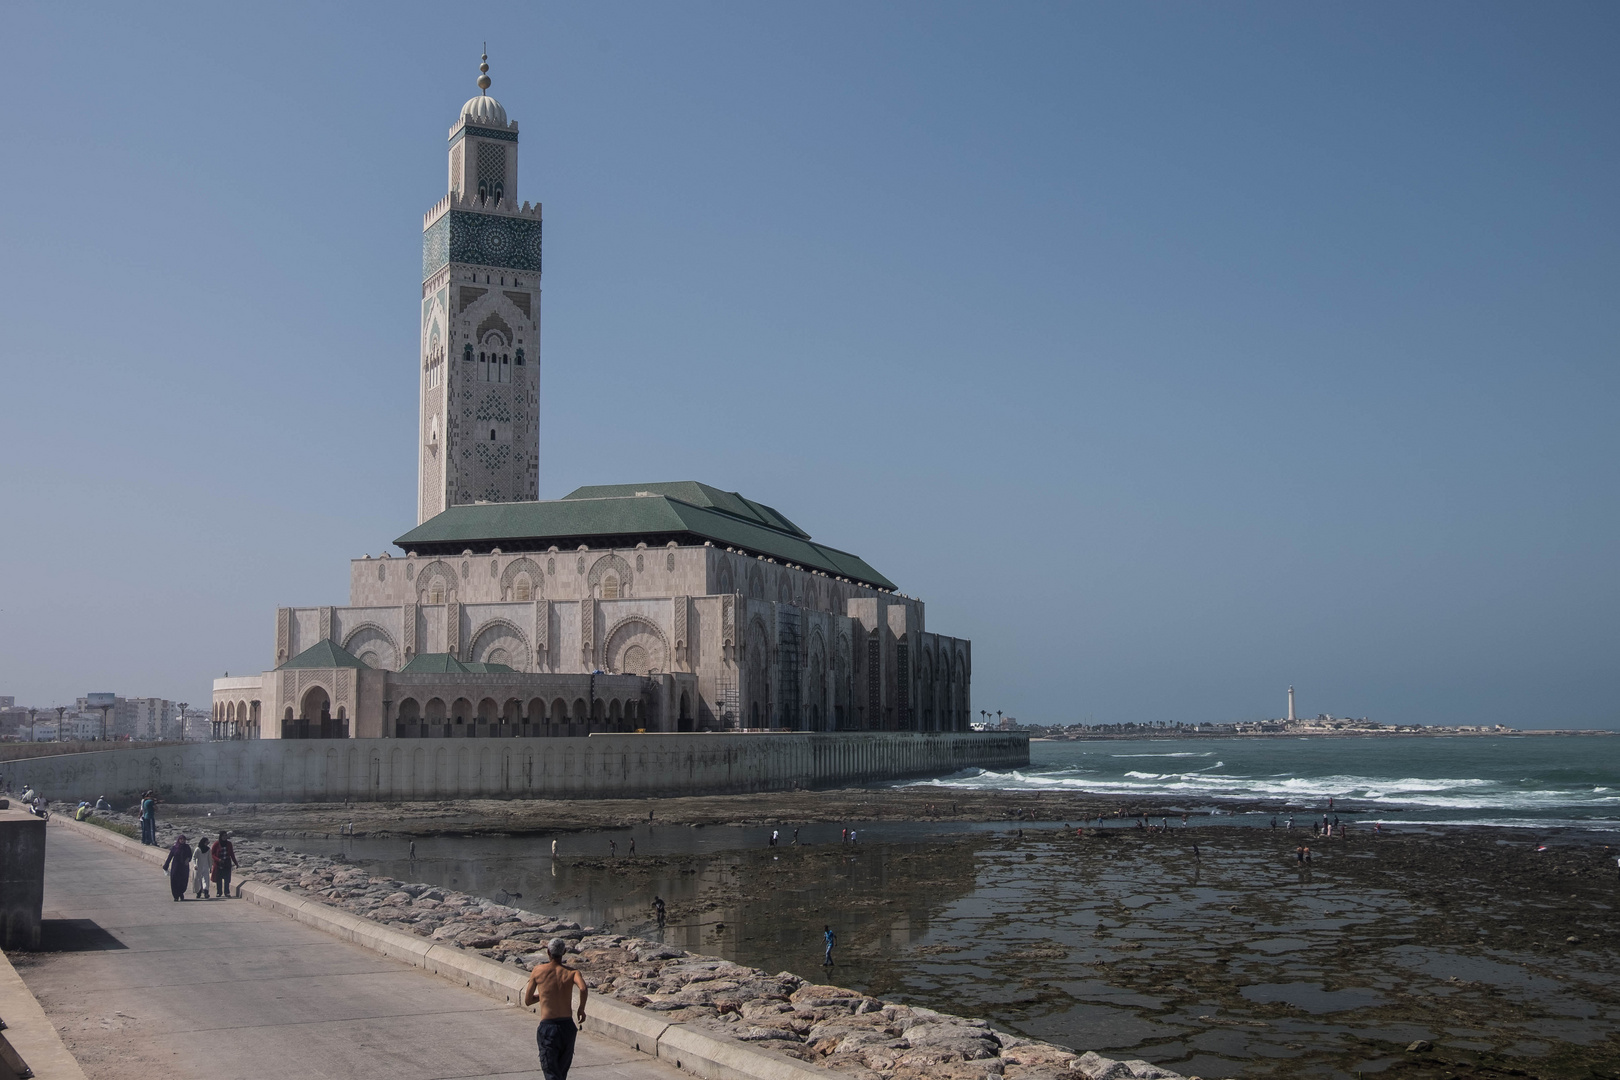 Casablanca-Grande Moschee  Hassan II